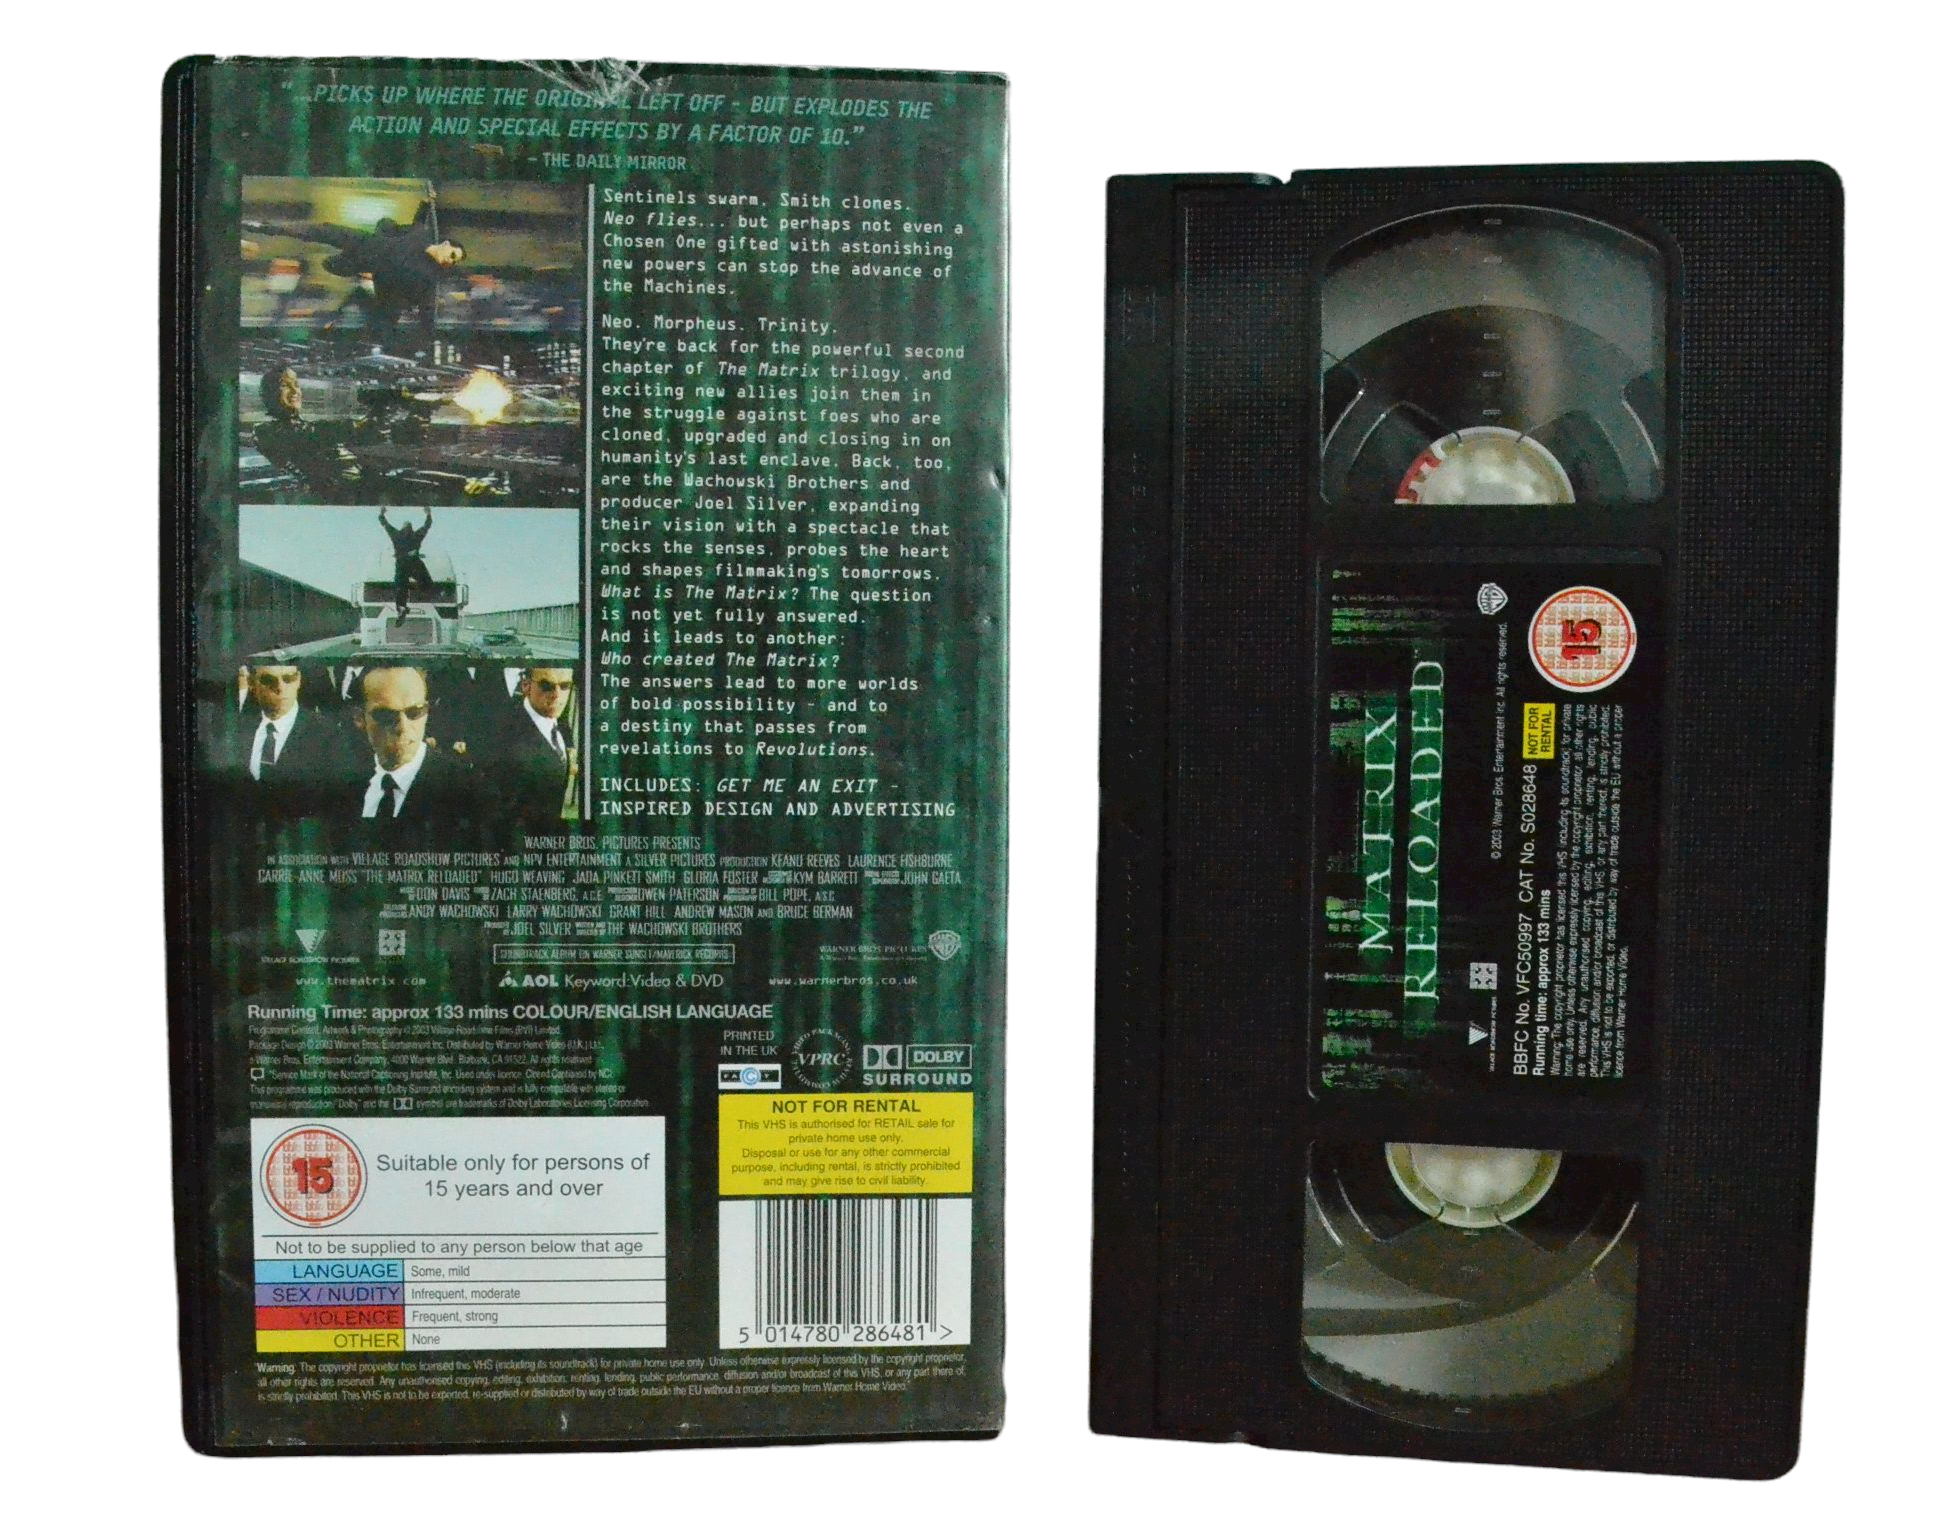 Matrix Reloaded - Keanu Reeves - Warner Home Video - Vintage - Pal VHS-